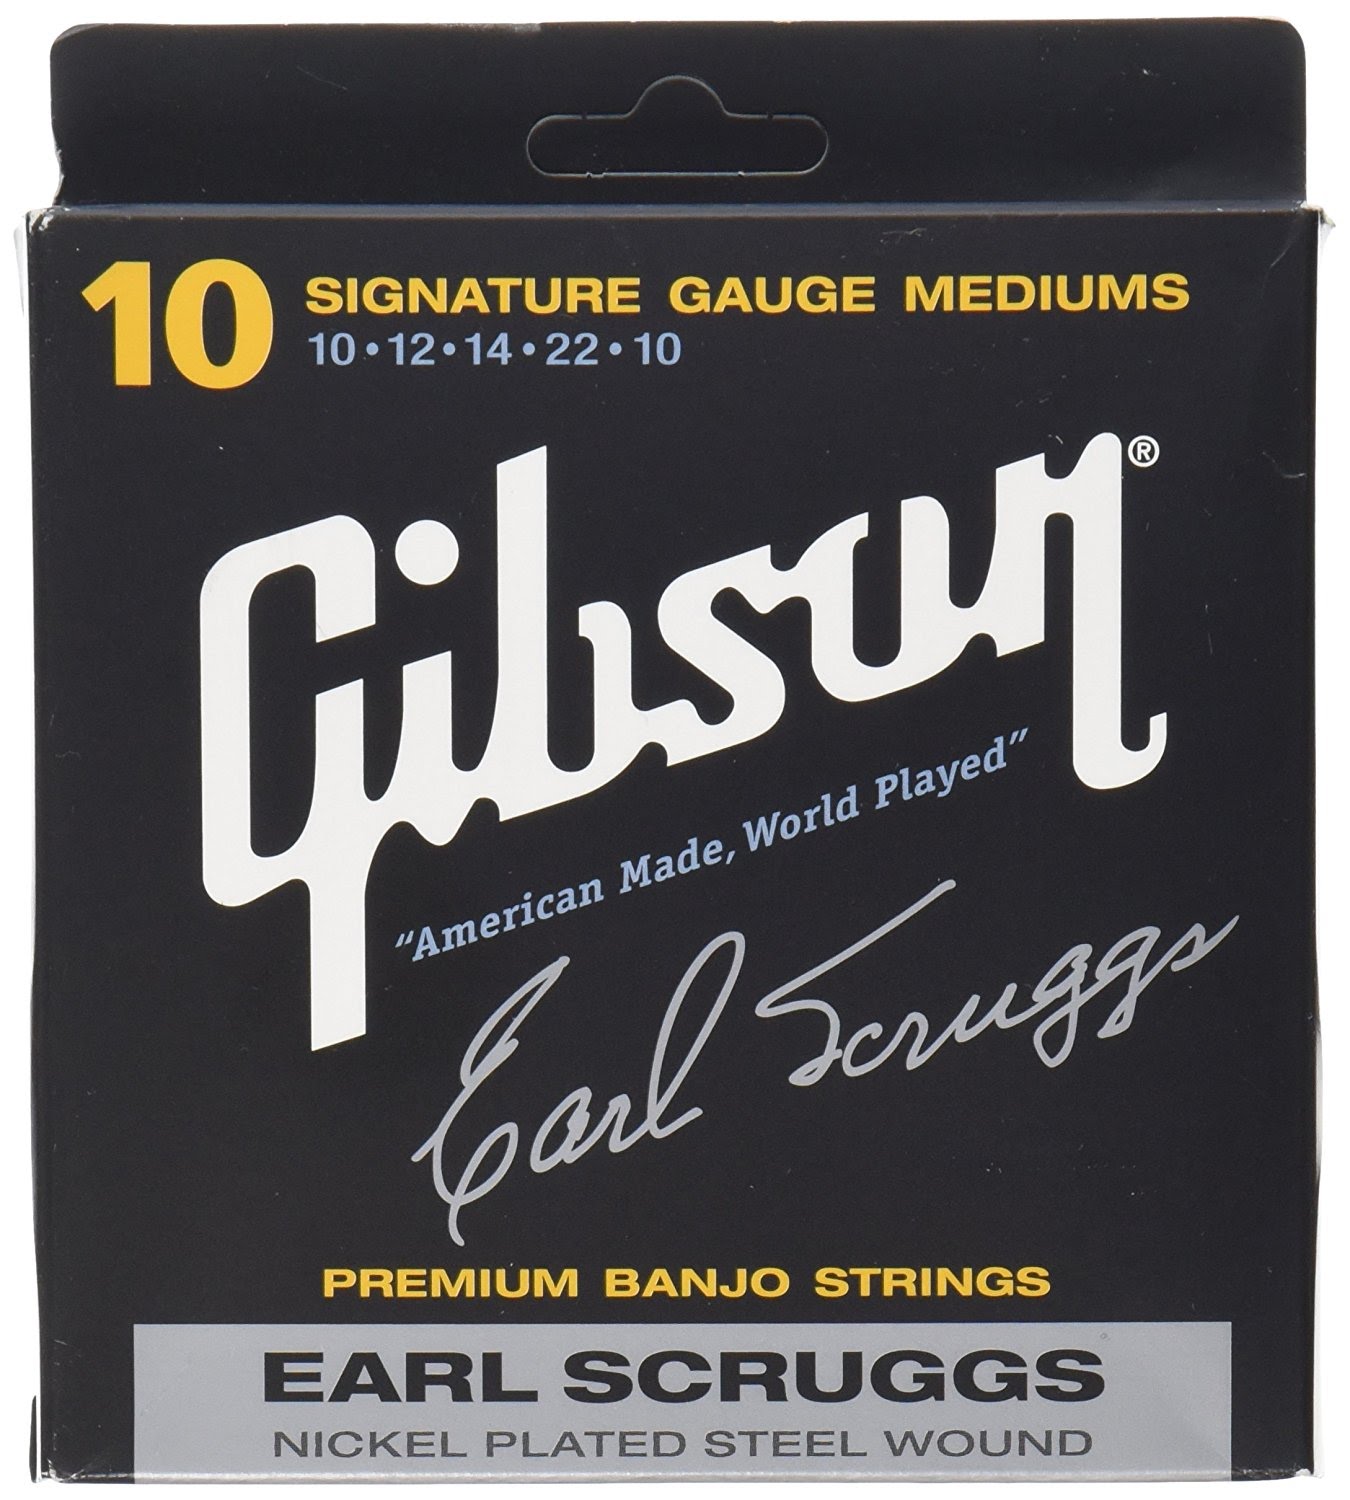 Gibson Earl Scruggs Signature Medium Banjo Strings